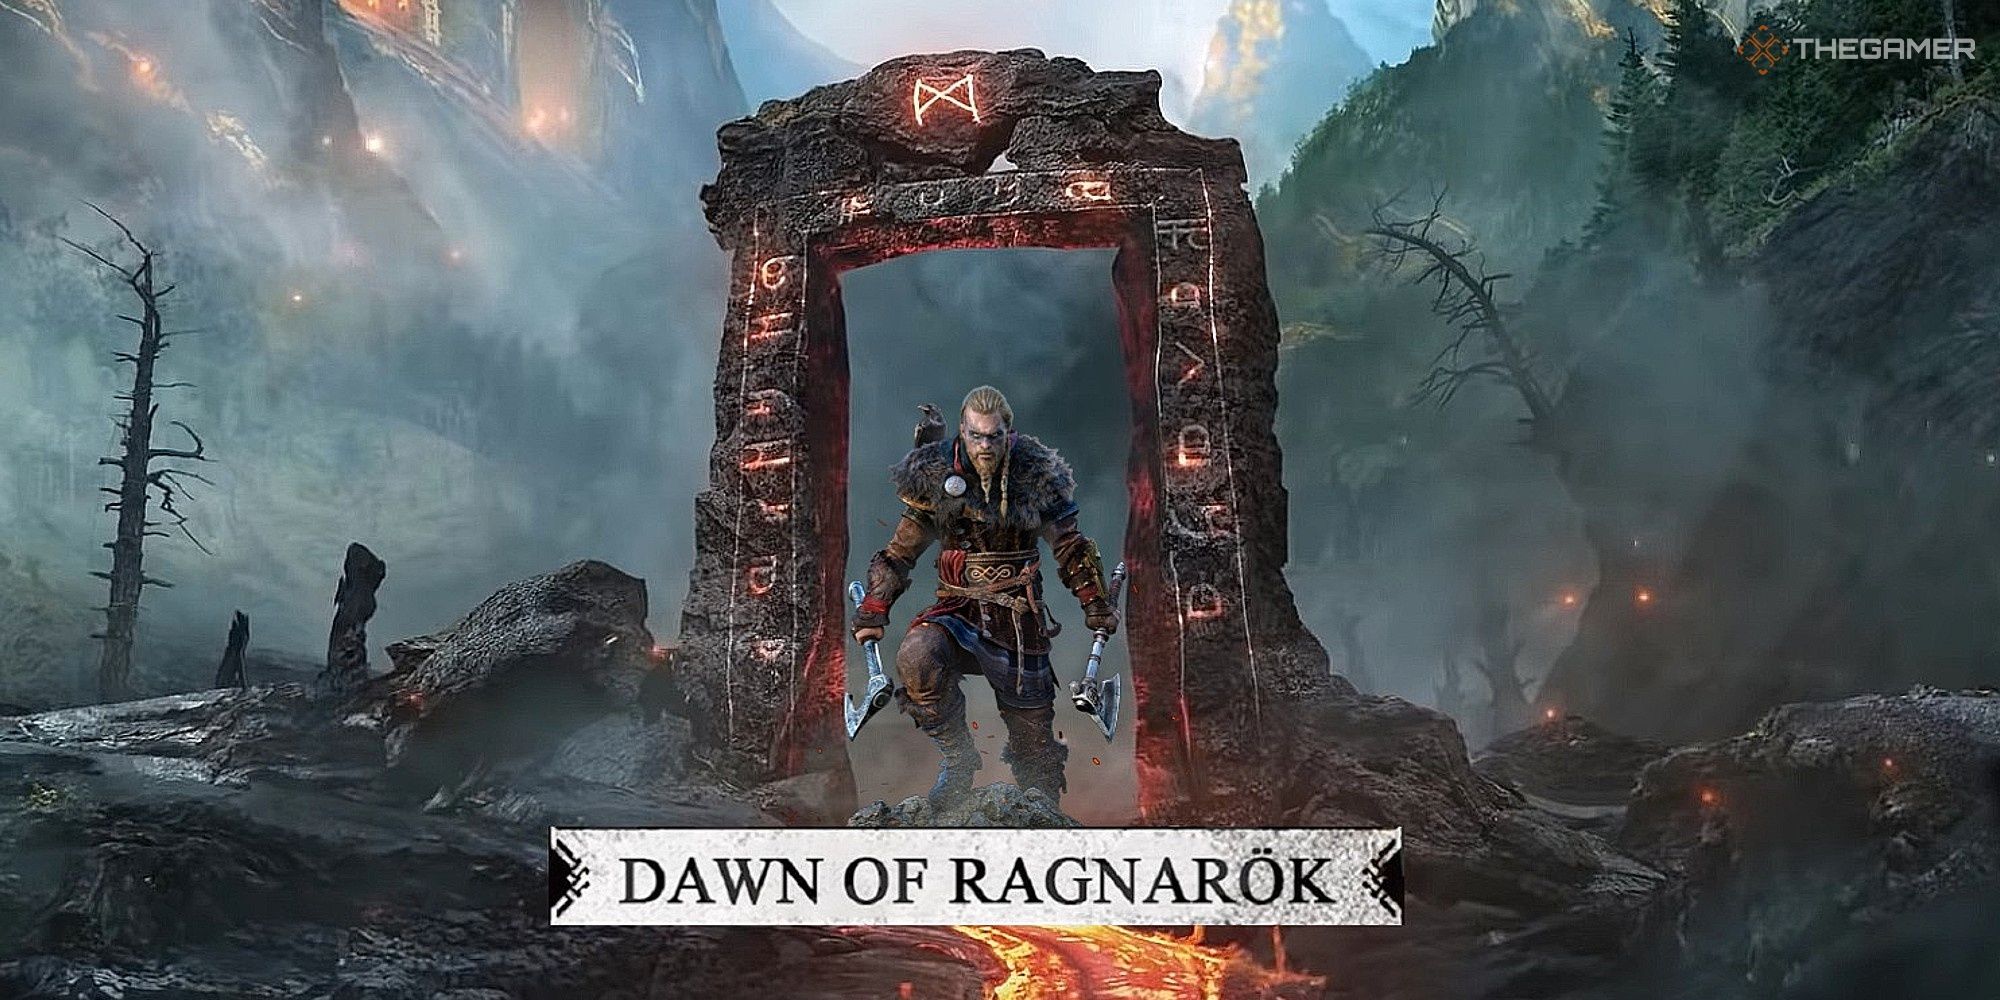 Assassin's Creed Valhalla Next DLC Is Called Dawn Of Ragnarok, According To Datamine